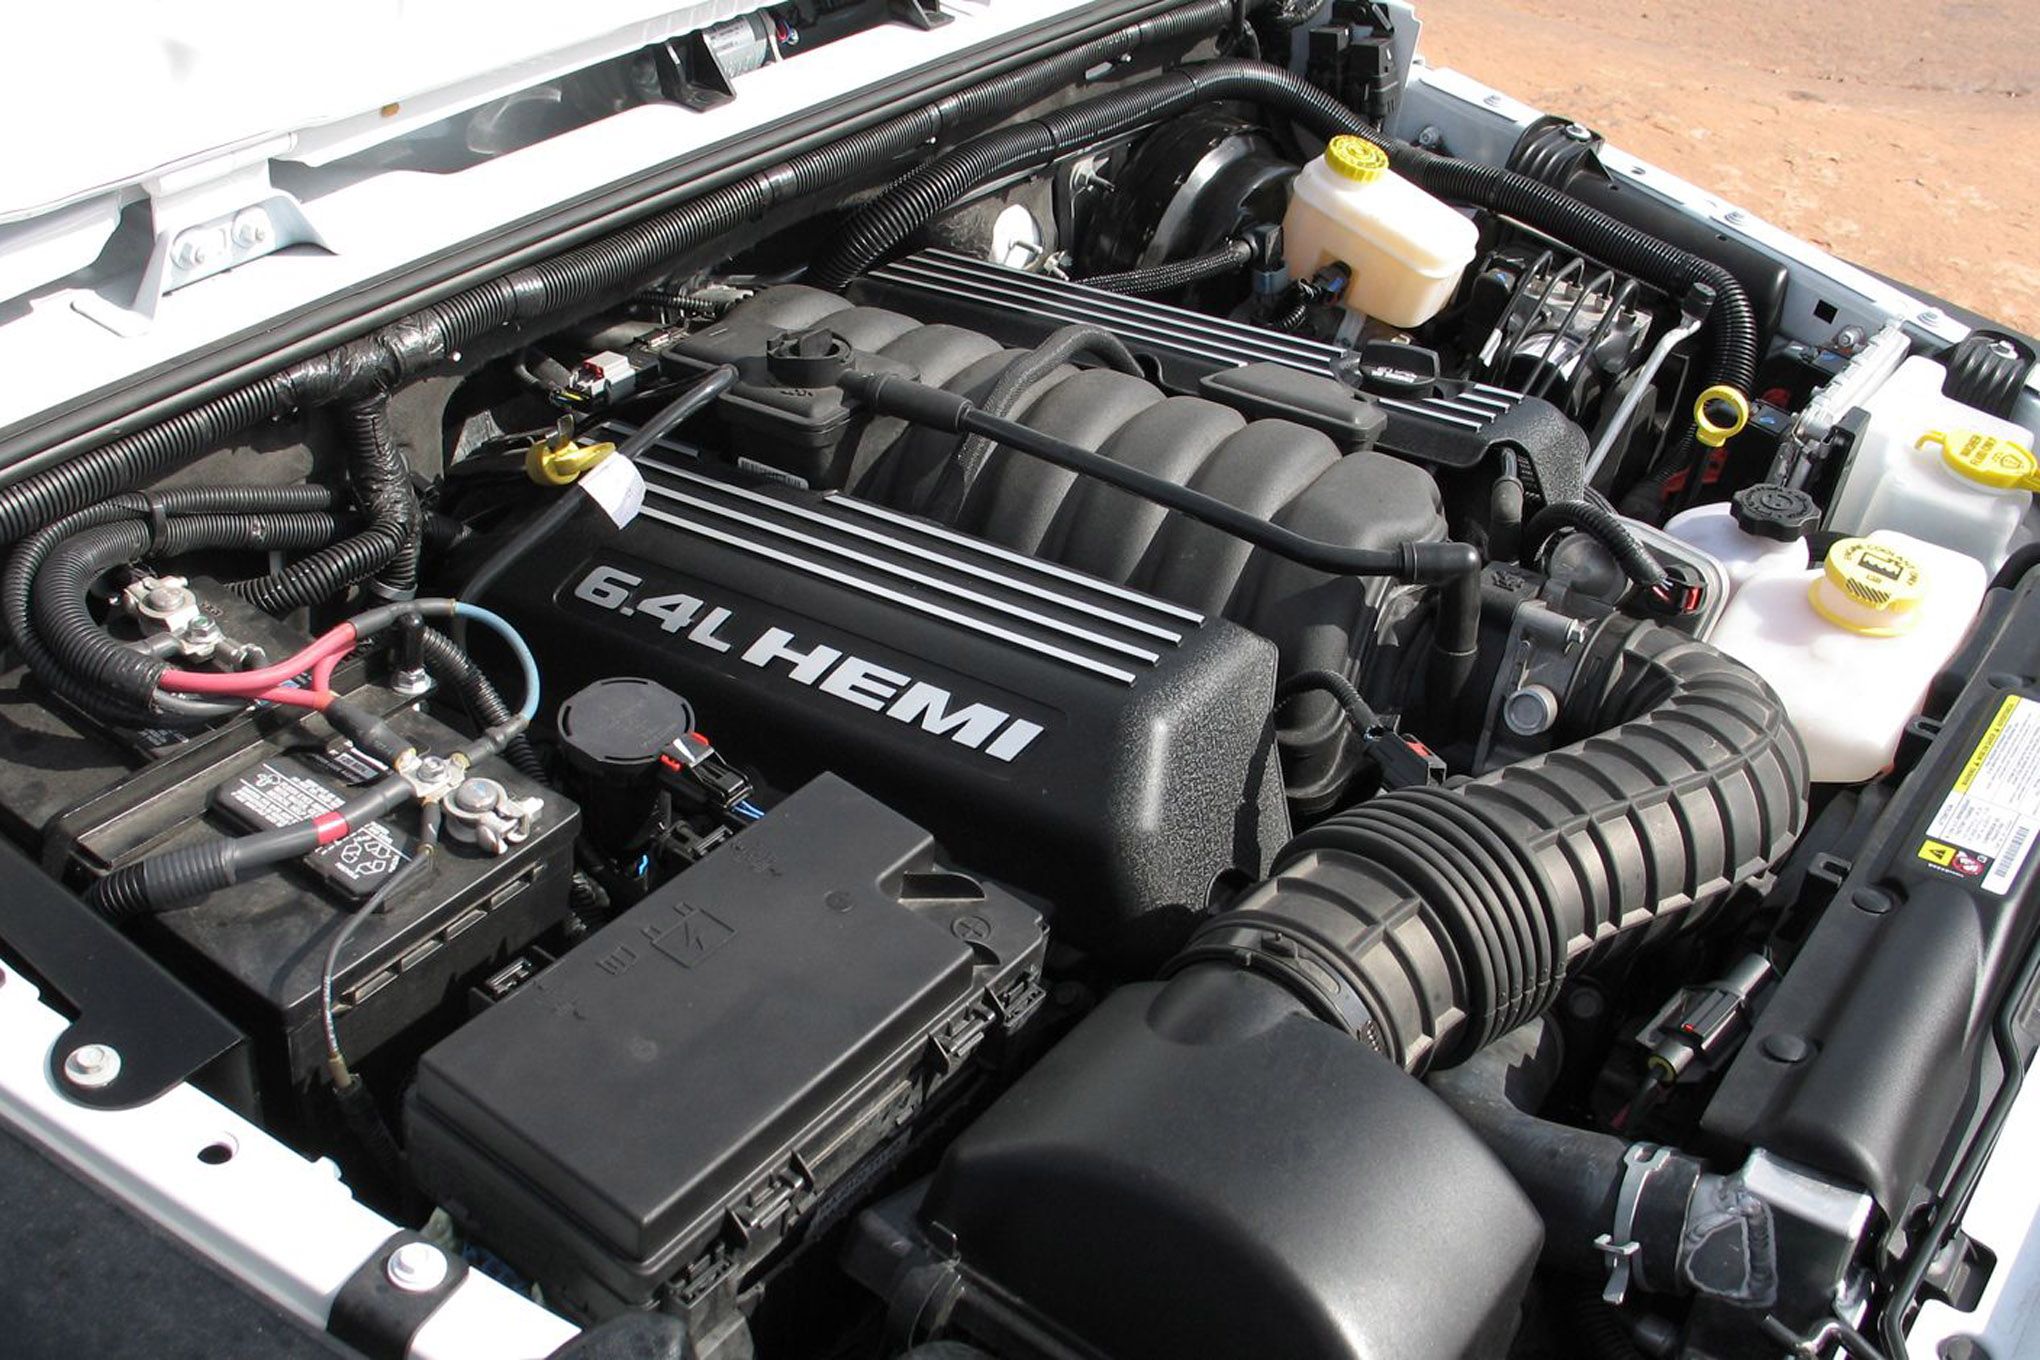 History of the Hemi V-8 Engine